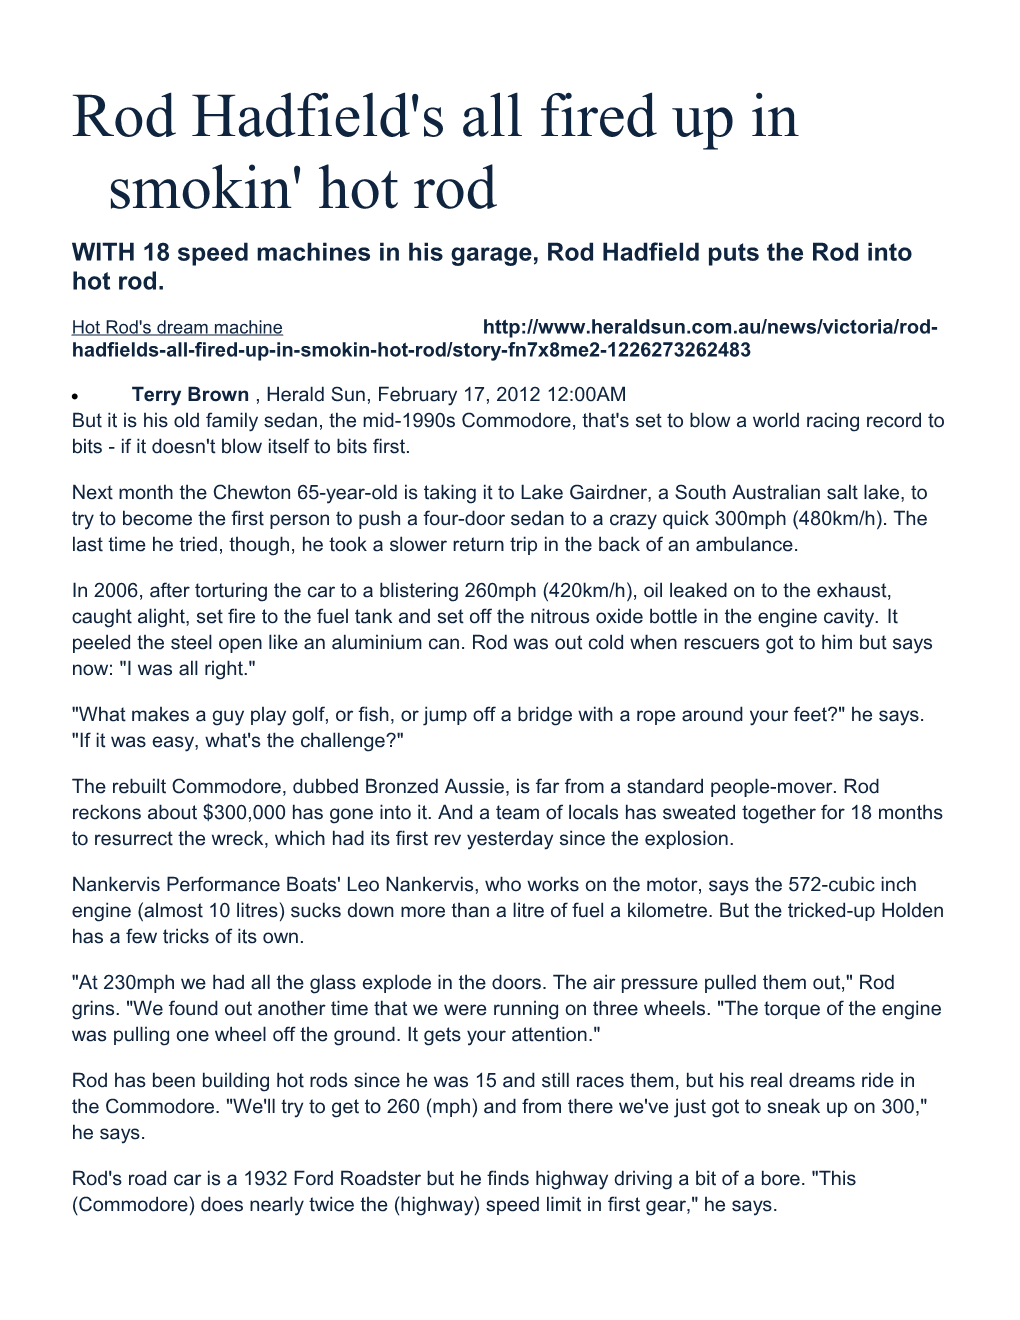 Rod Hadfield's All Fired up in Smokin' Hot Rod